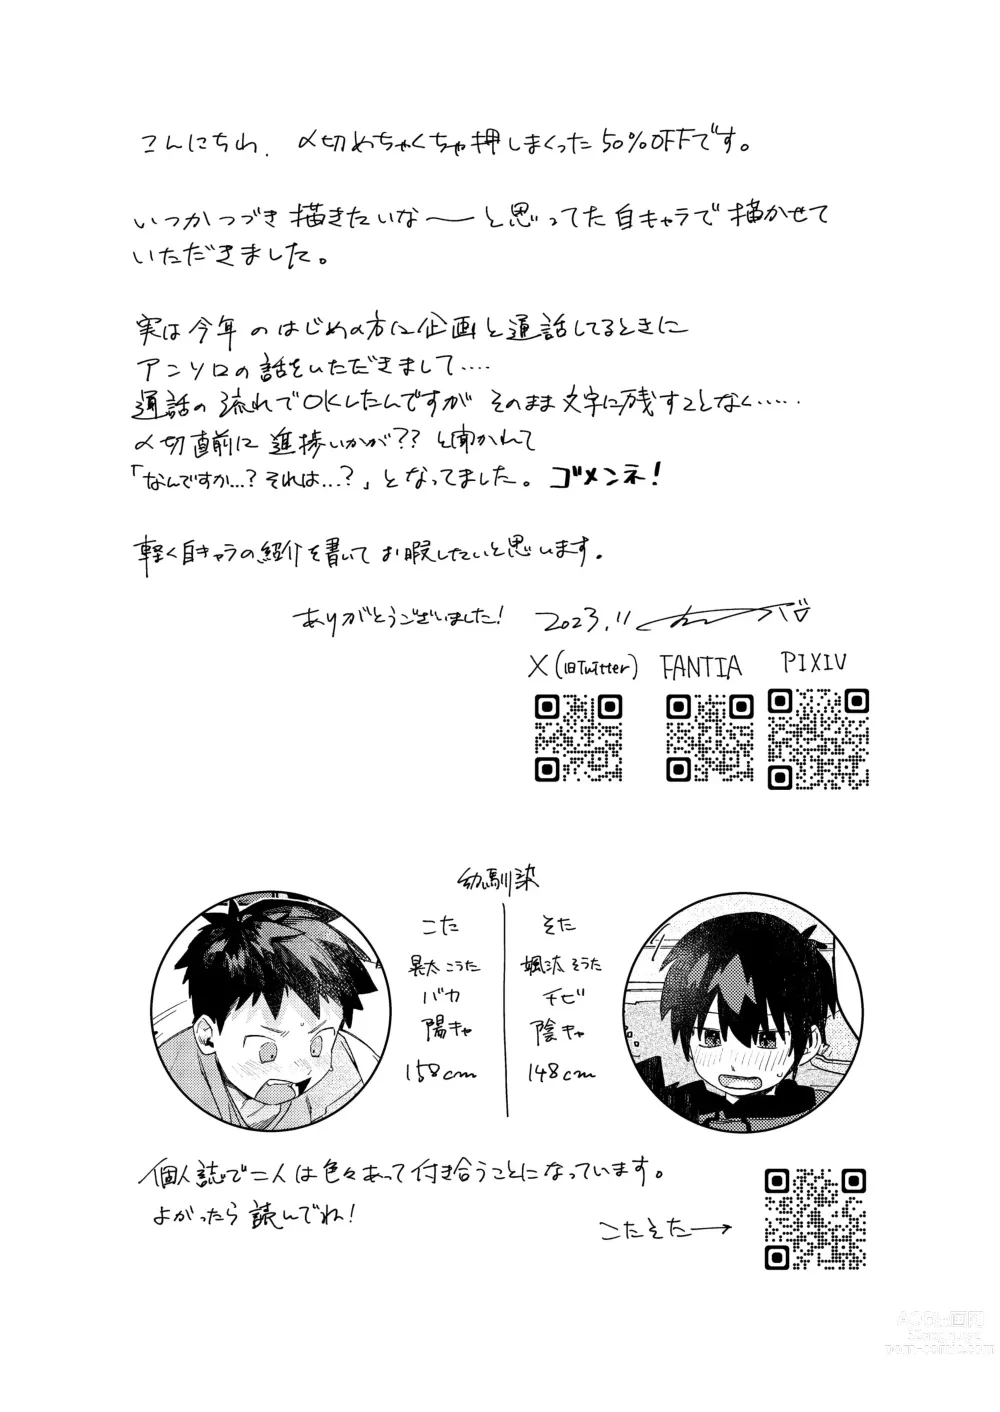 Page 10 of doujinshi Shota Sextet 6